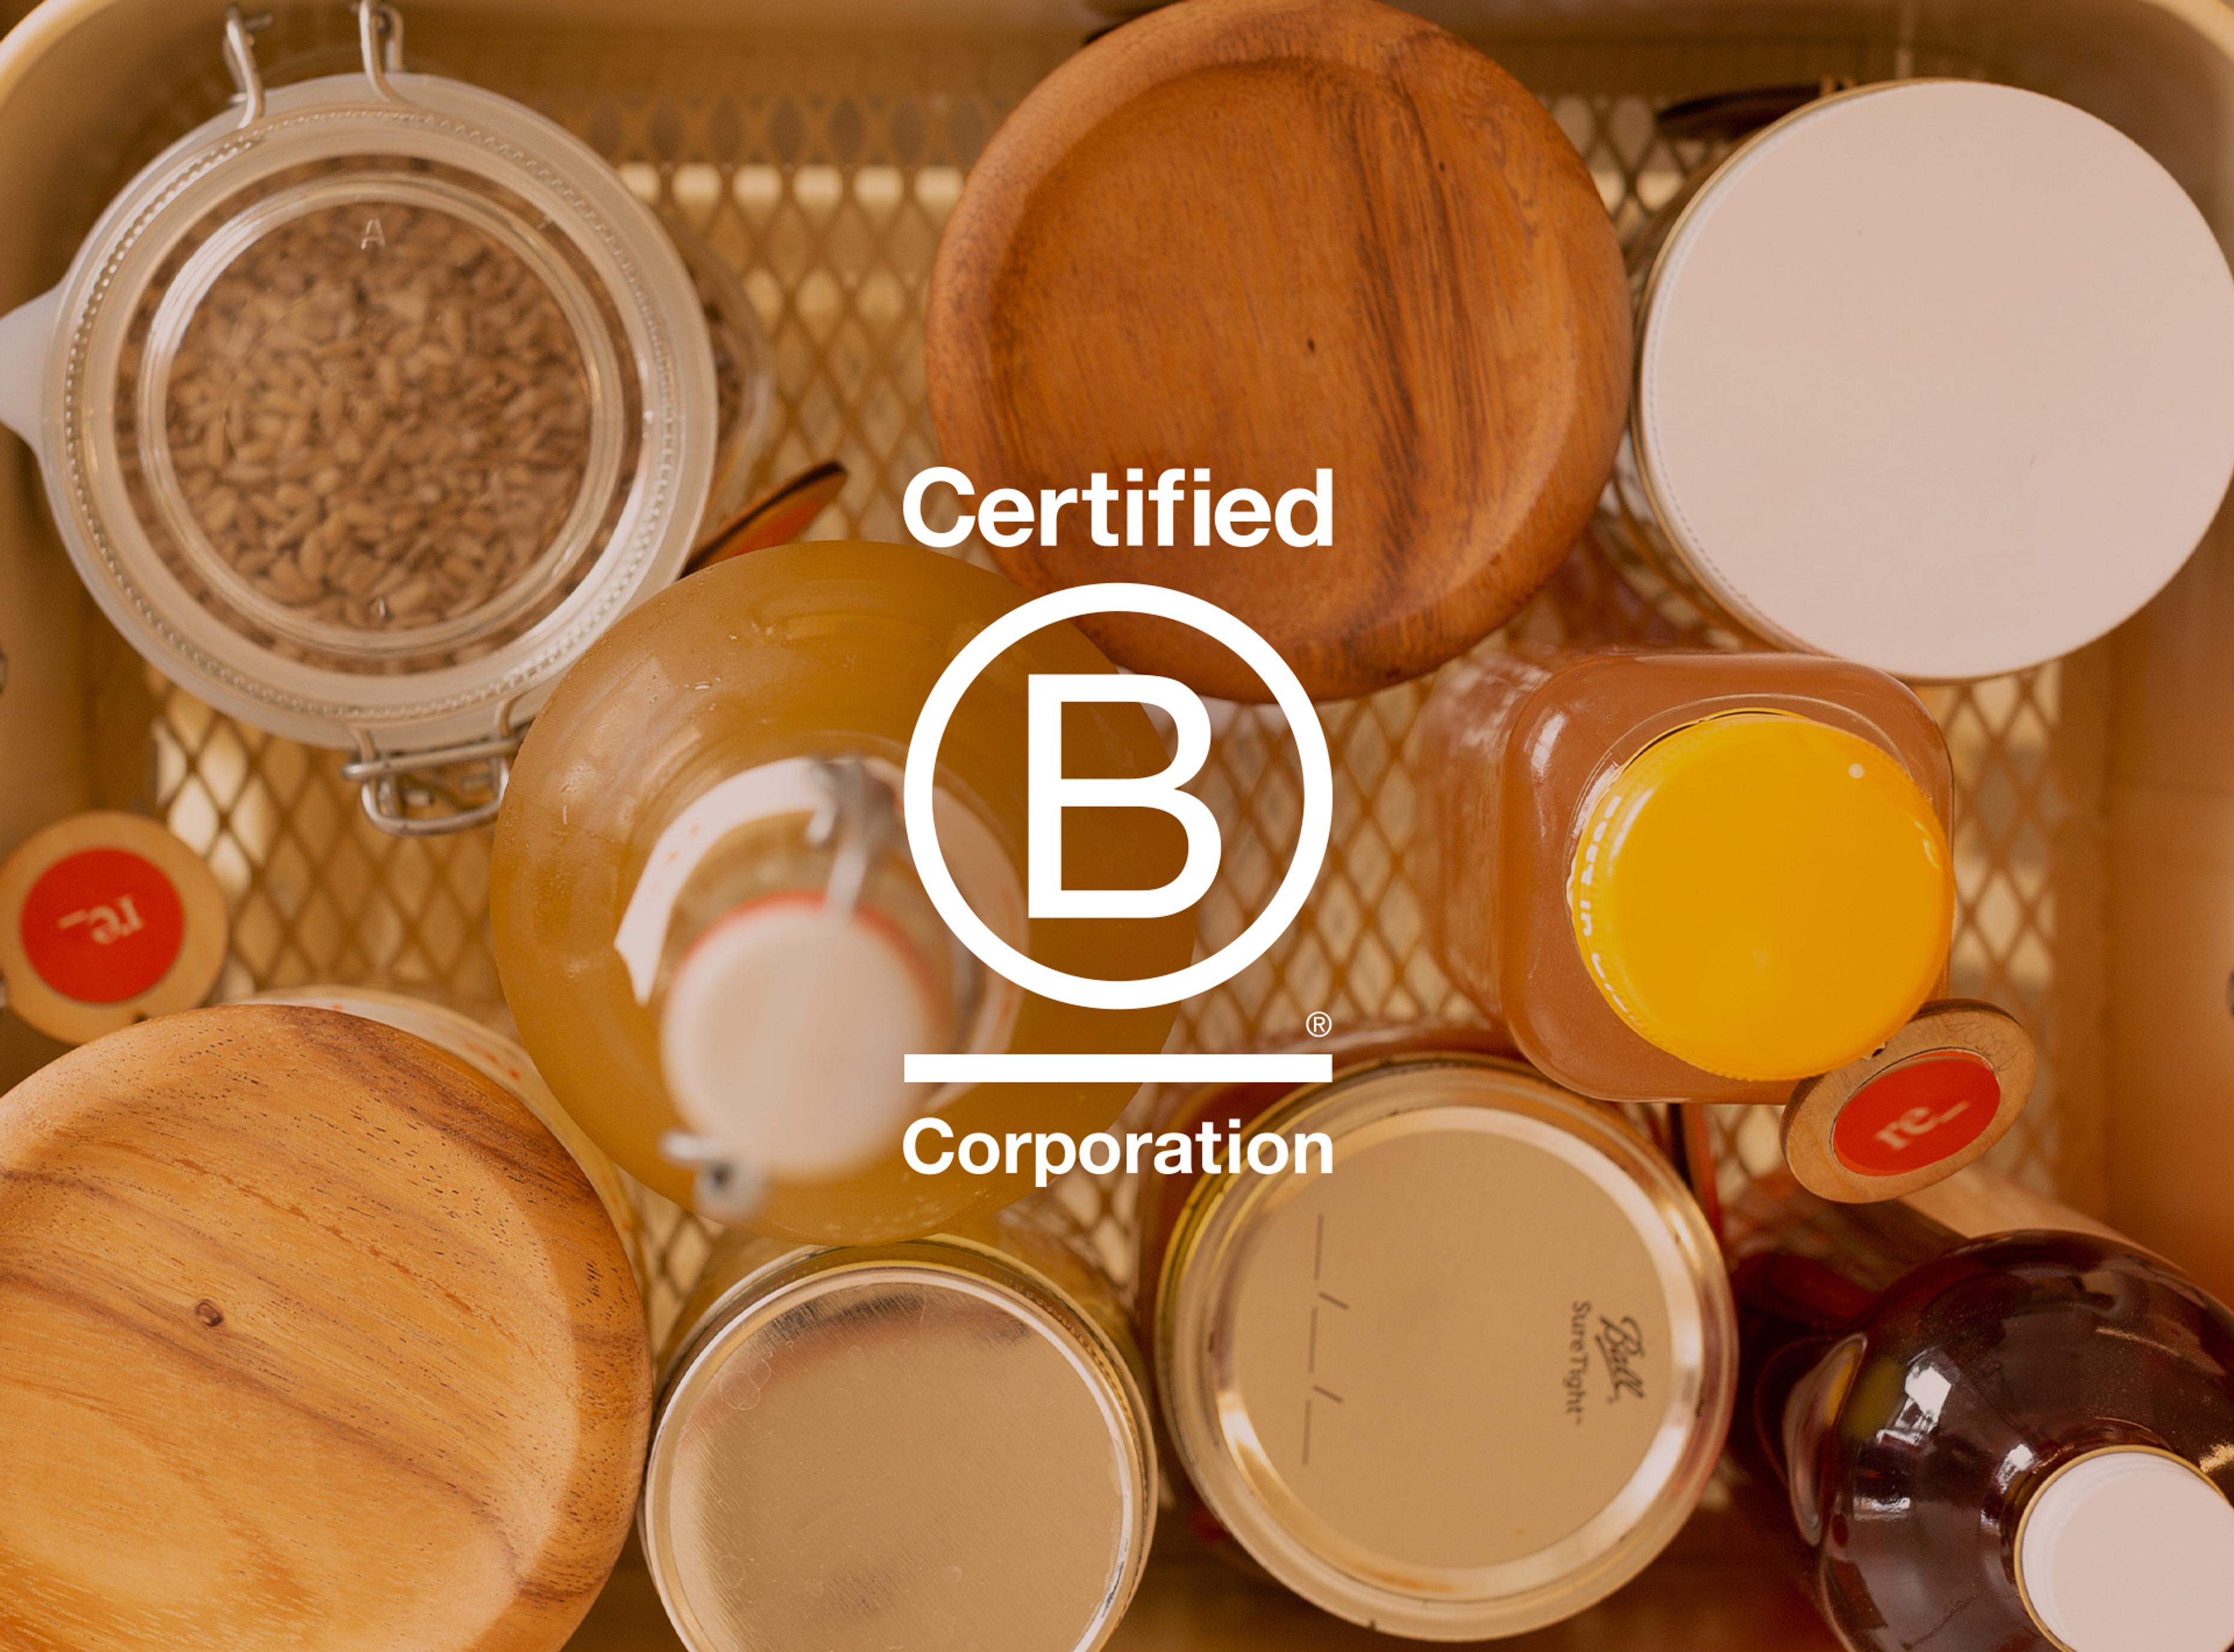 b corporation image with logo